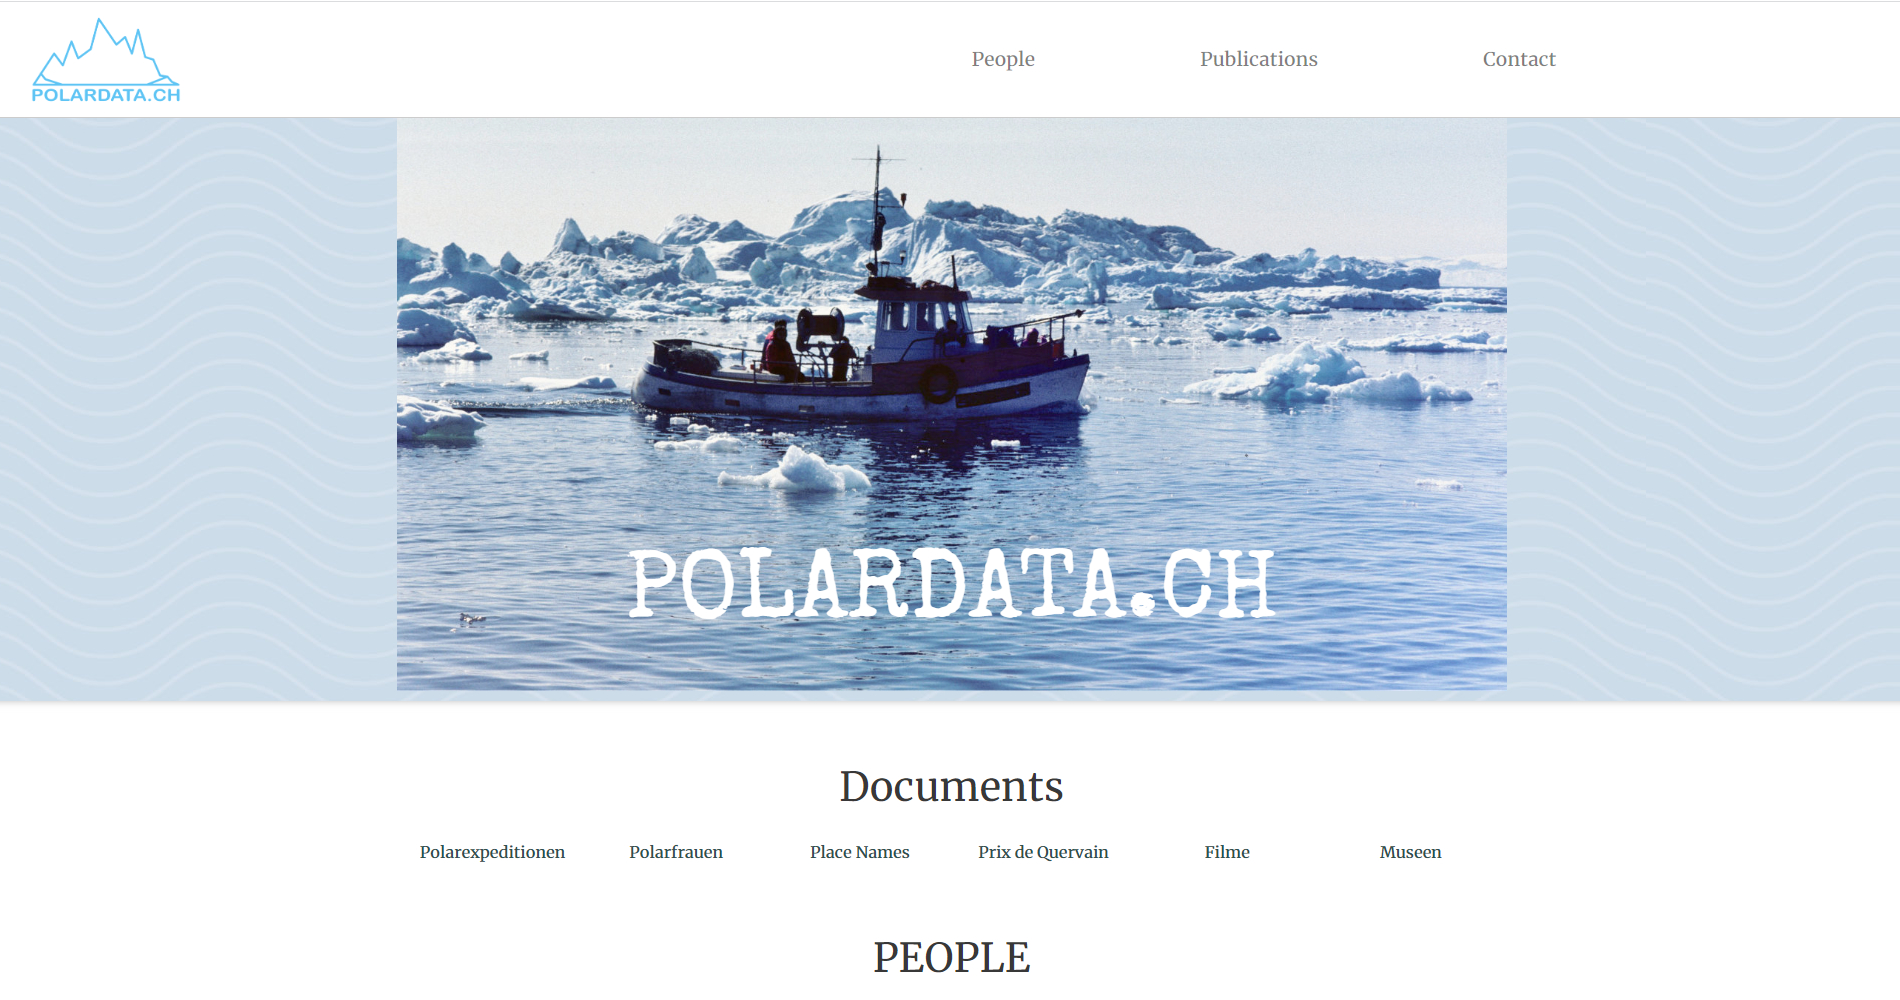 Polardata-image